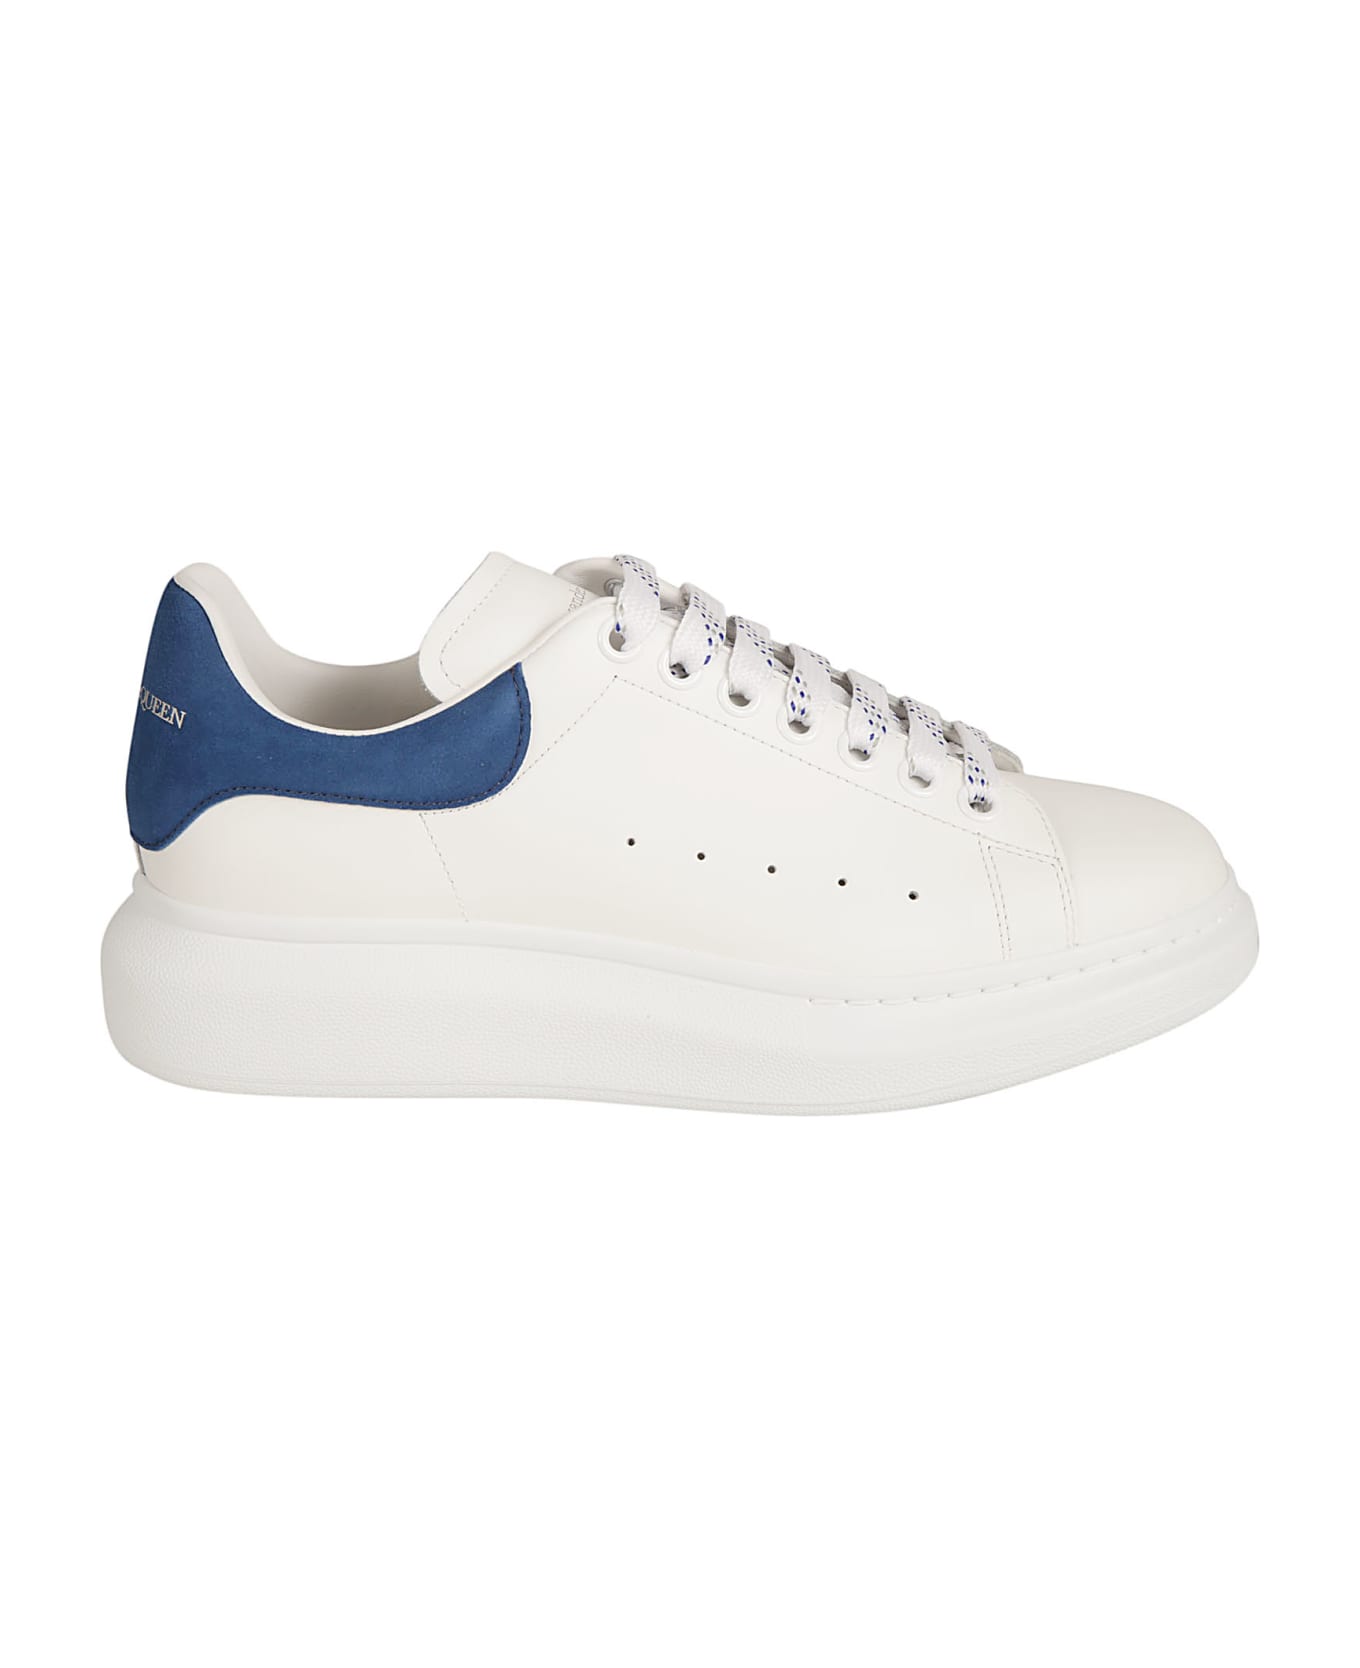 Alexander McQueen Larry Sneakers - White/Paris Blue スニーカー